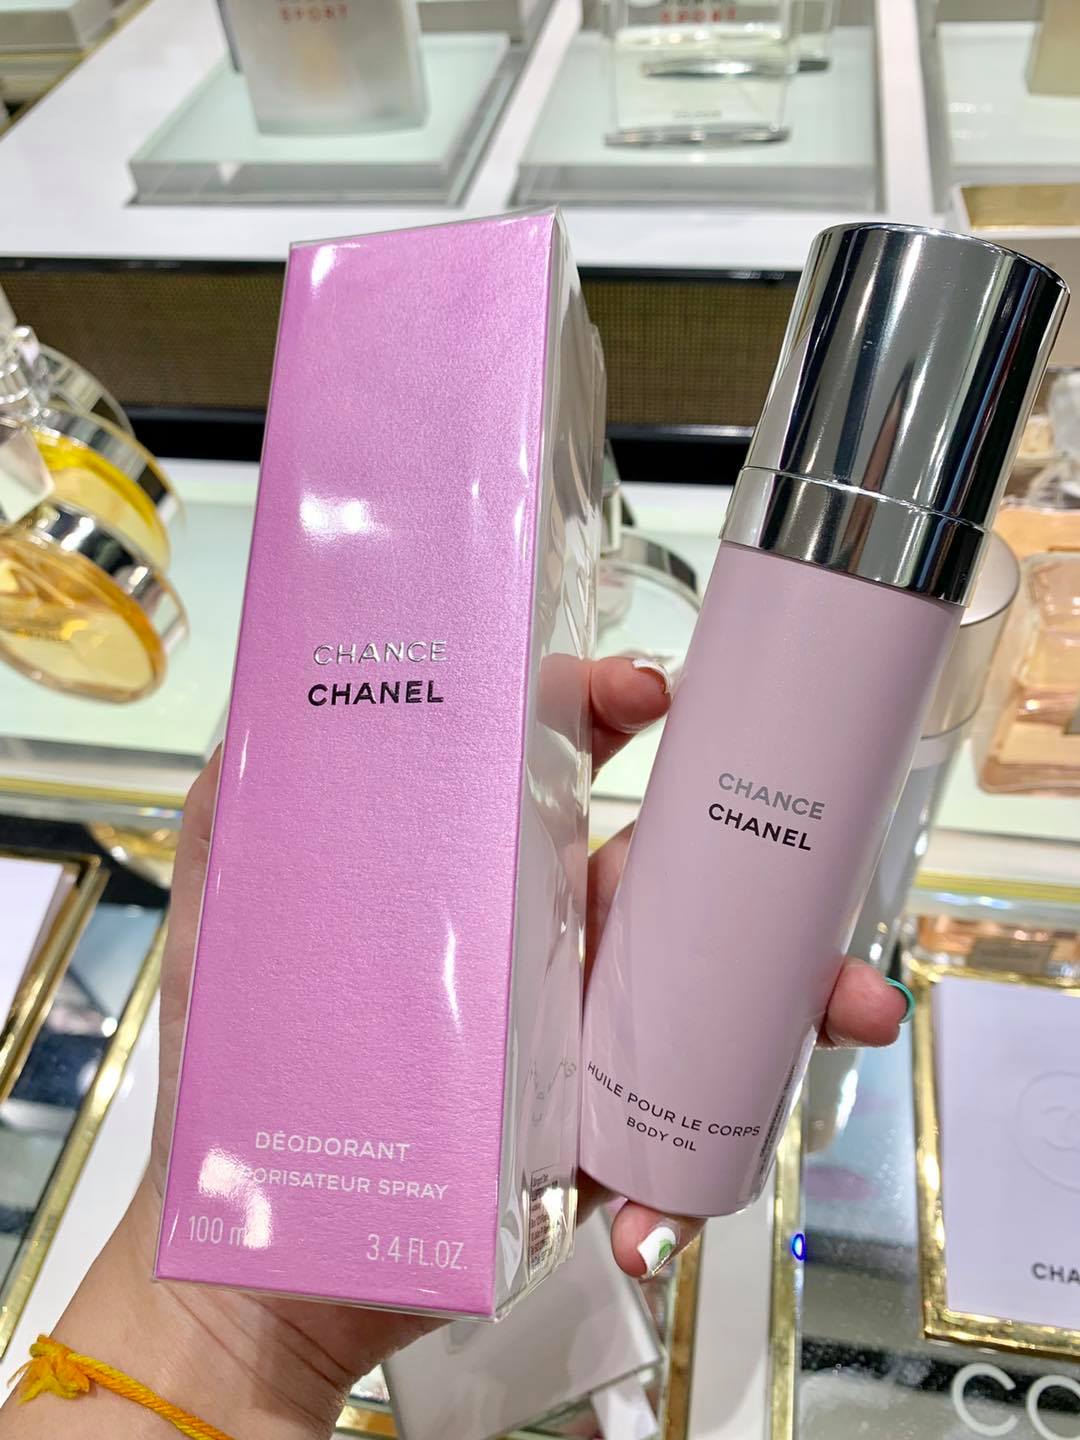 Chanel Chance Eau Tendre - Deodorant